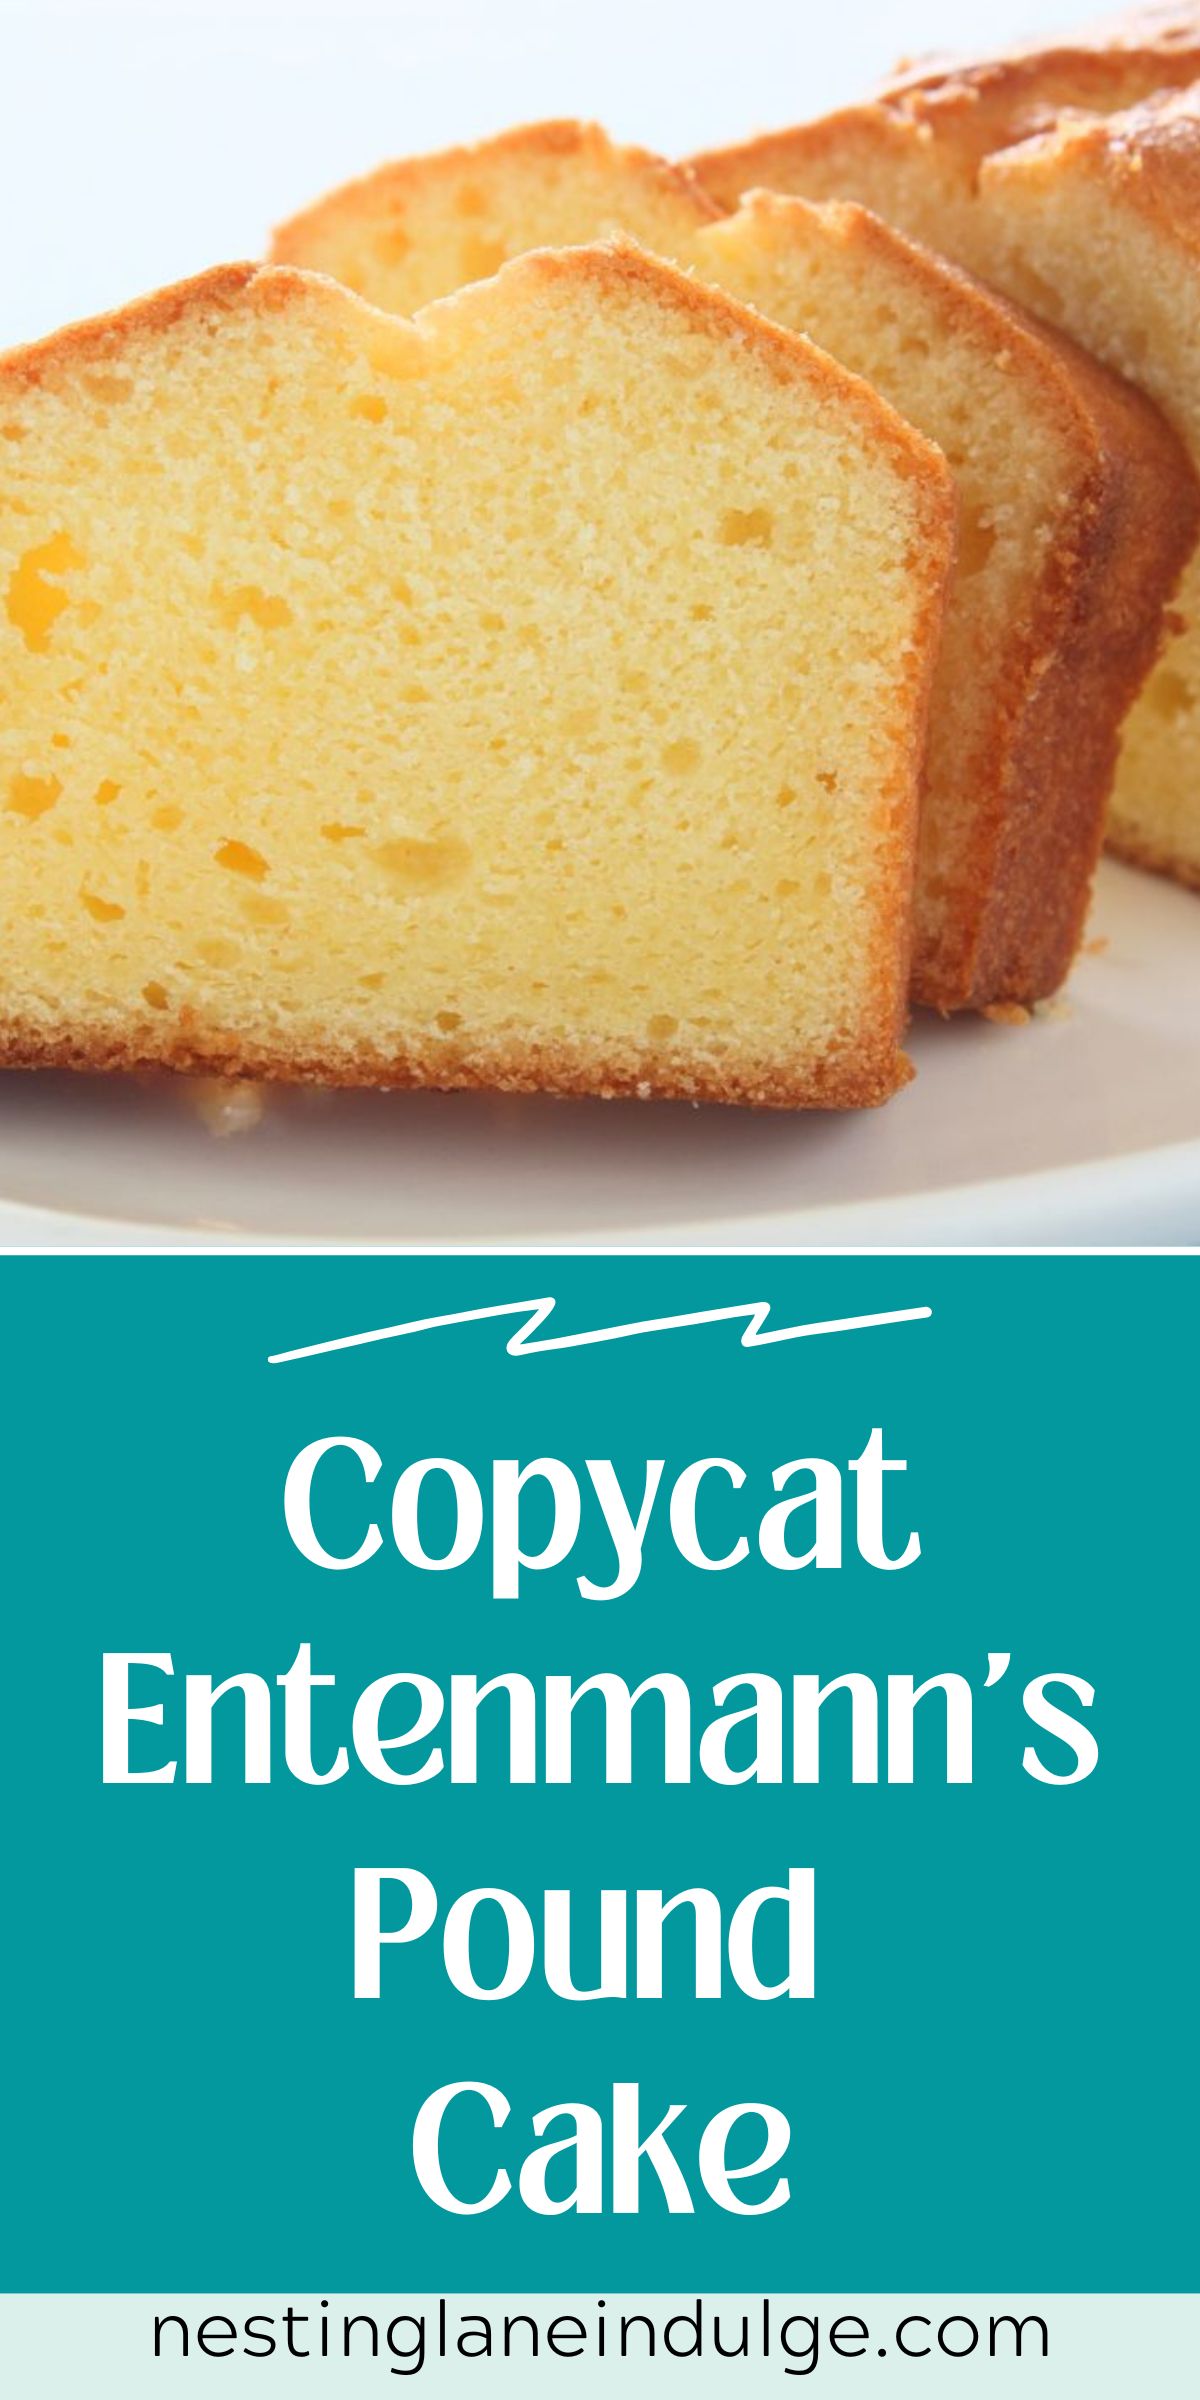 Graphic for Pinterest of Copycat Entenmann's Pound Cake Recipe.